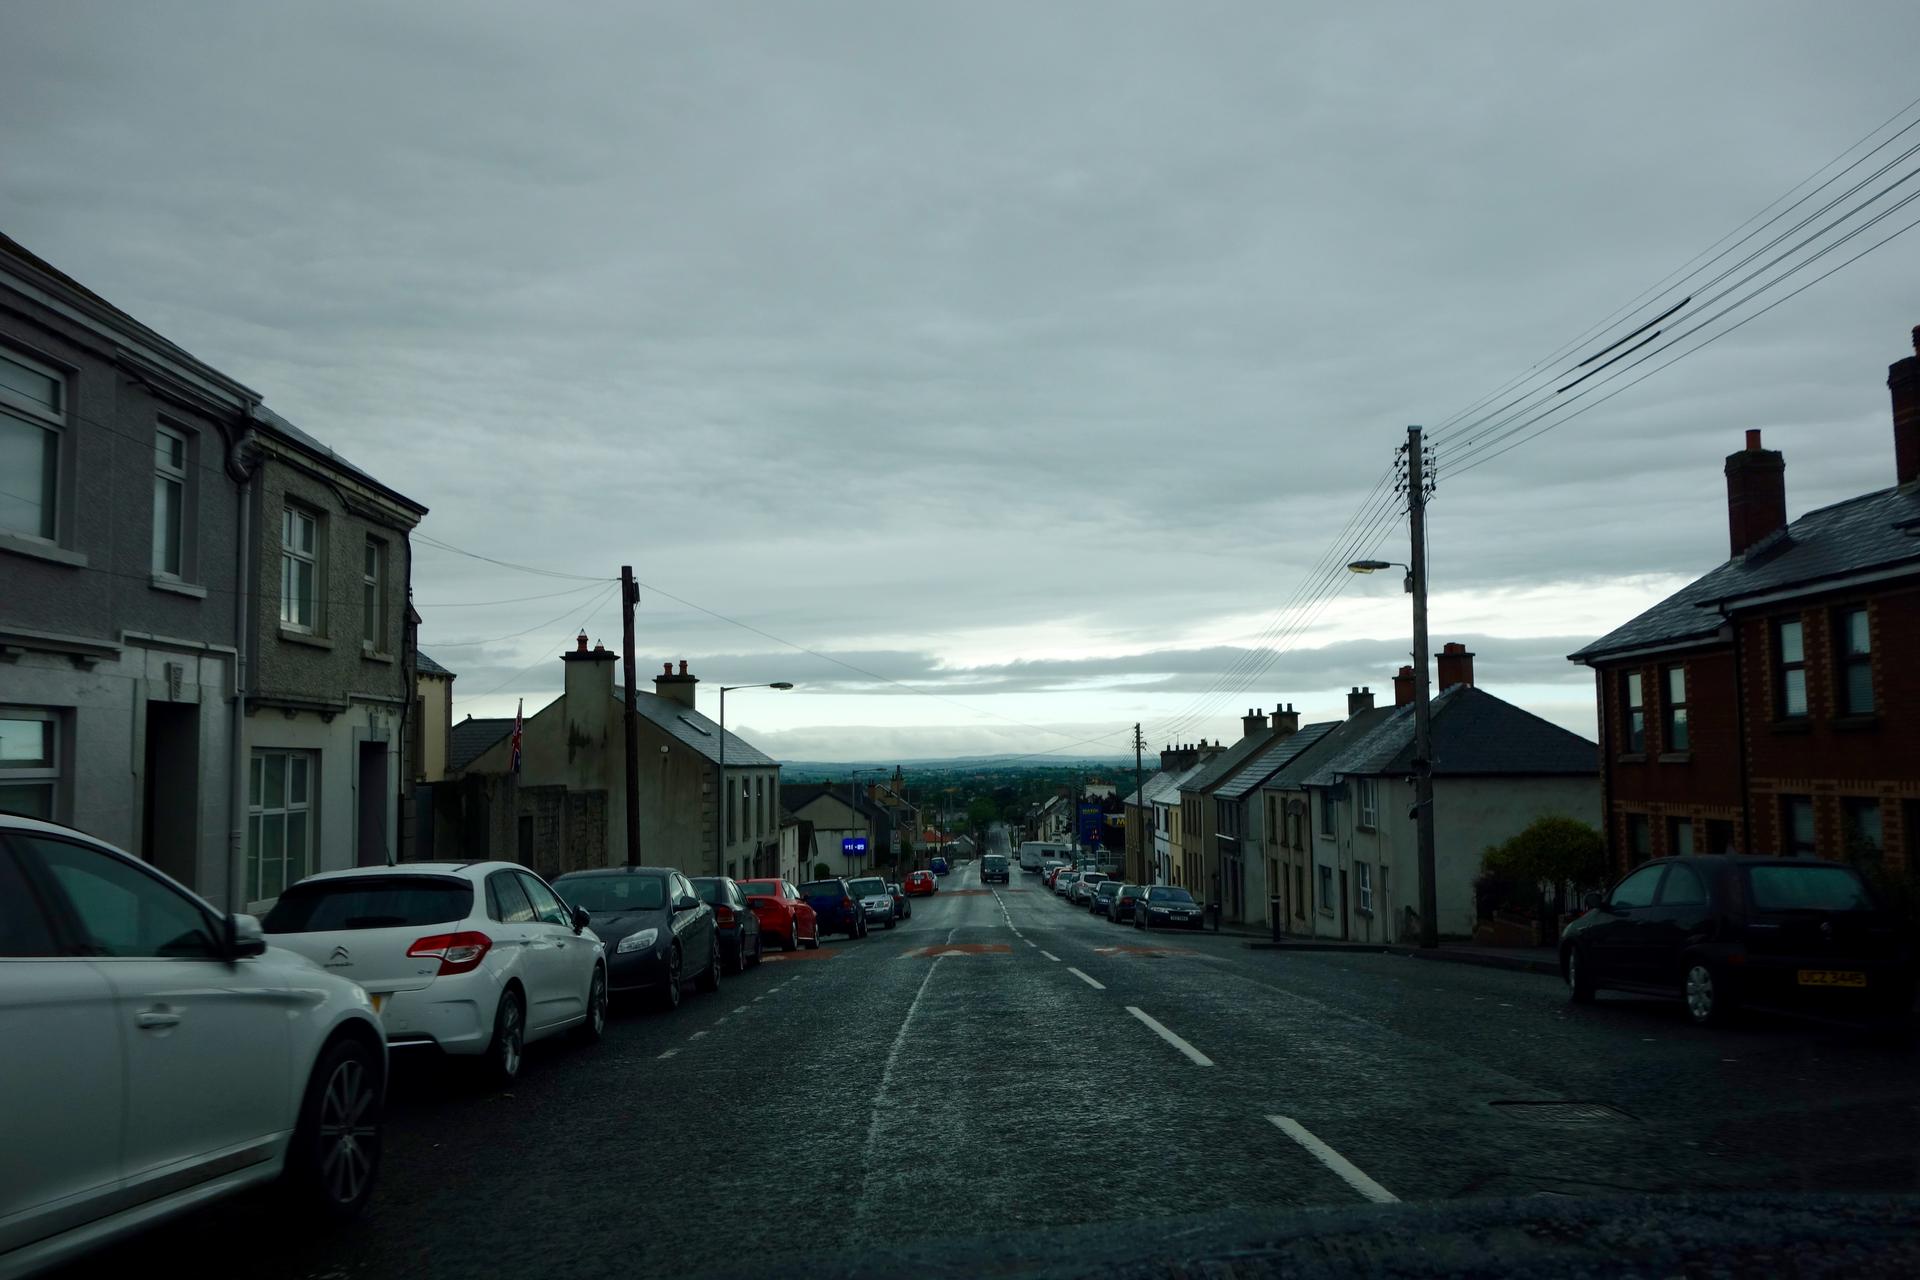 Northern Ireland border town